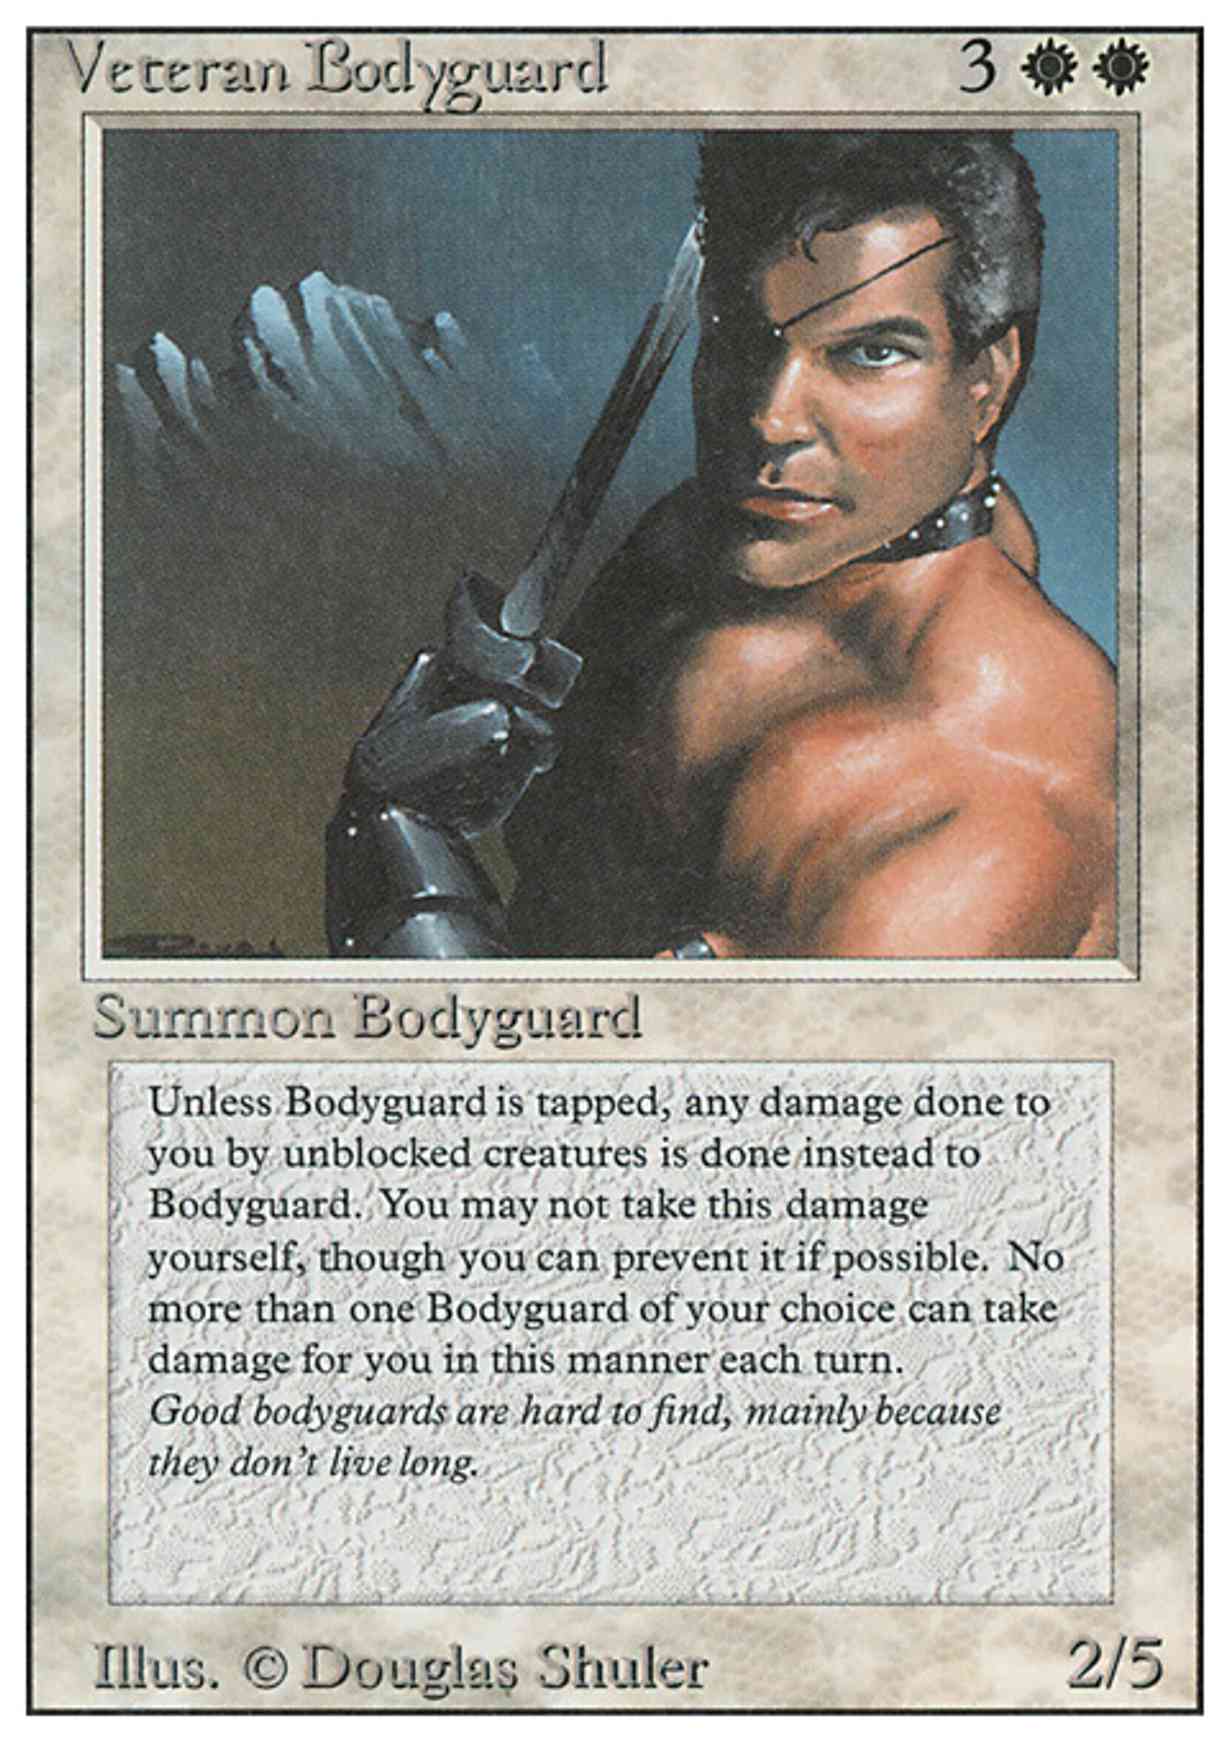 Veteran Bodyguard magic card front